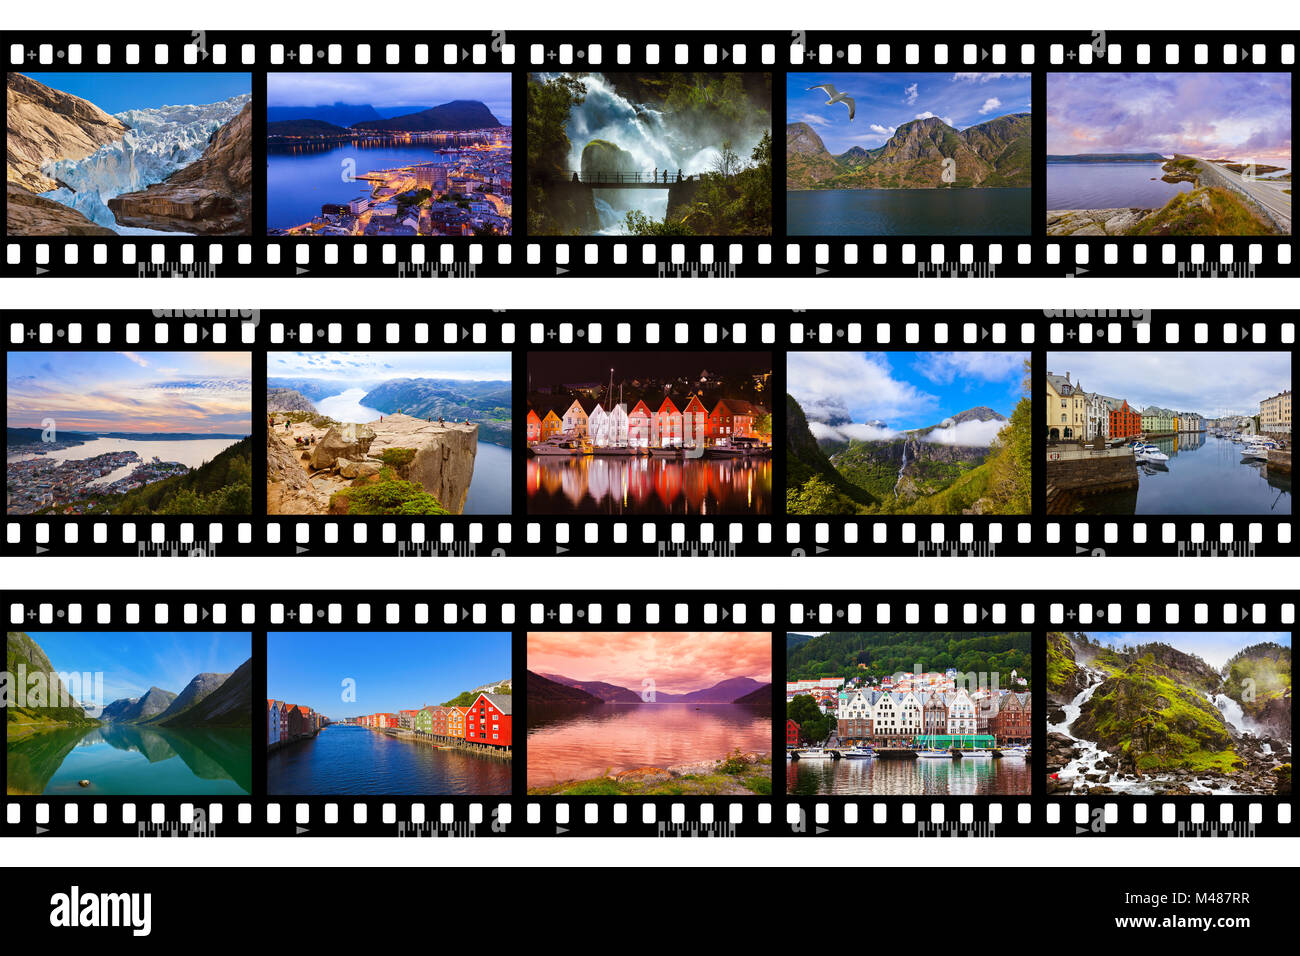 Rahmen des Films - Norwegen Reisebilder (meine Fotos) Stockfoto